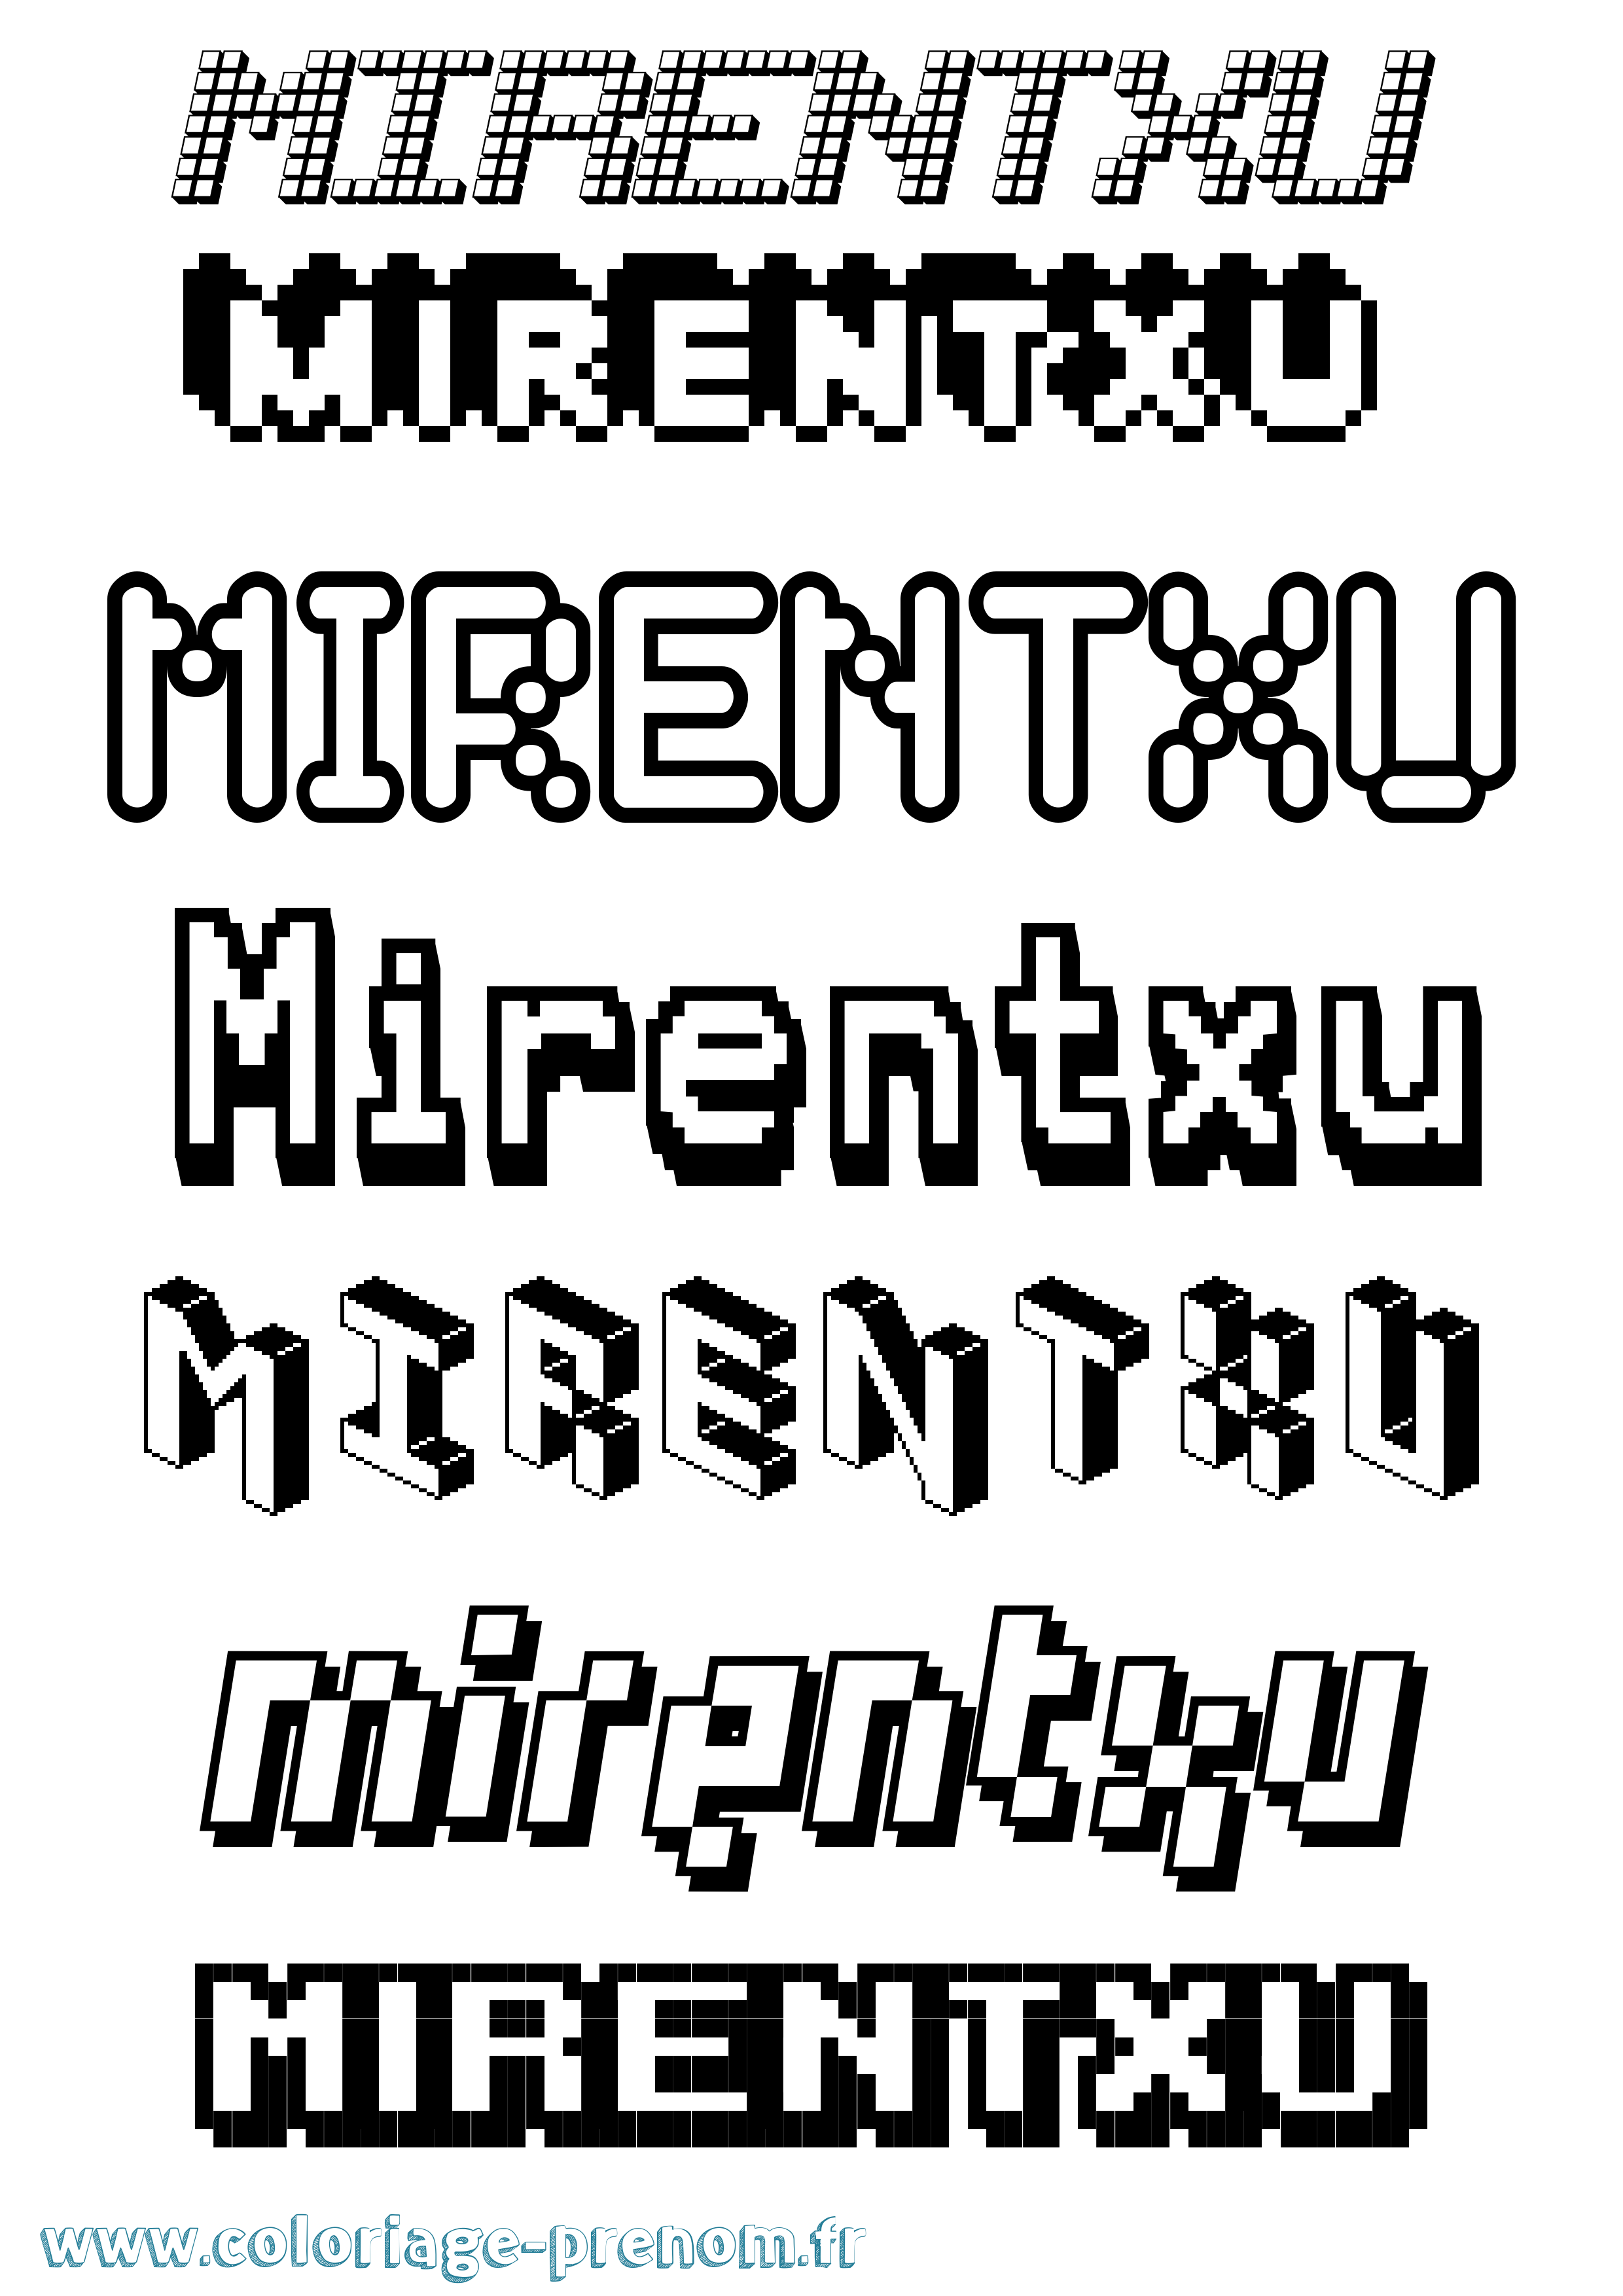 Coloriage prénom Mirentxu Pixel